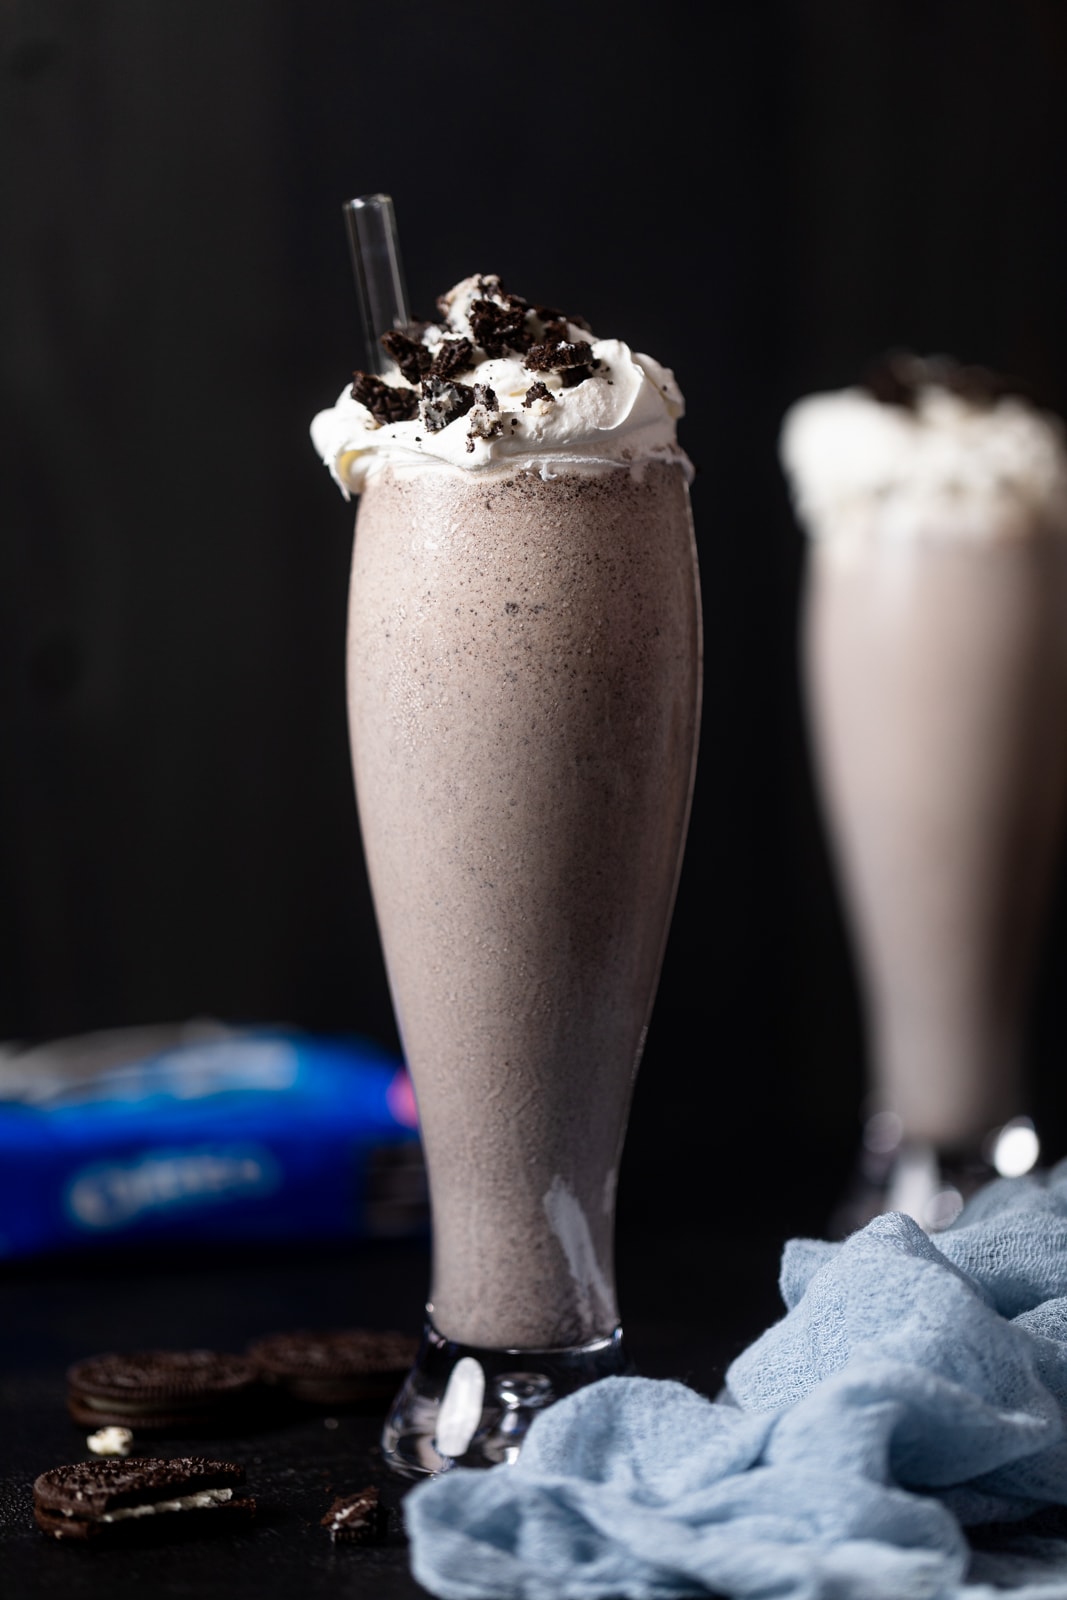 Oreo Milkshake Gift Set with 2 Glass Cups, Ice Cream Scoop, 2 Straws ~ No  Oreos